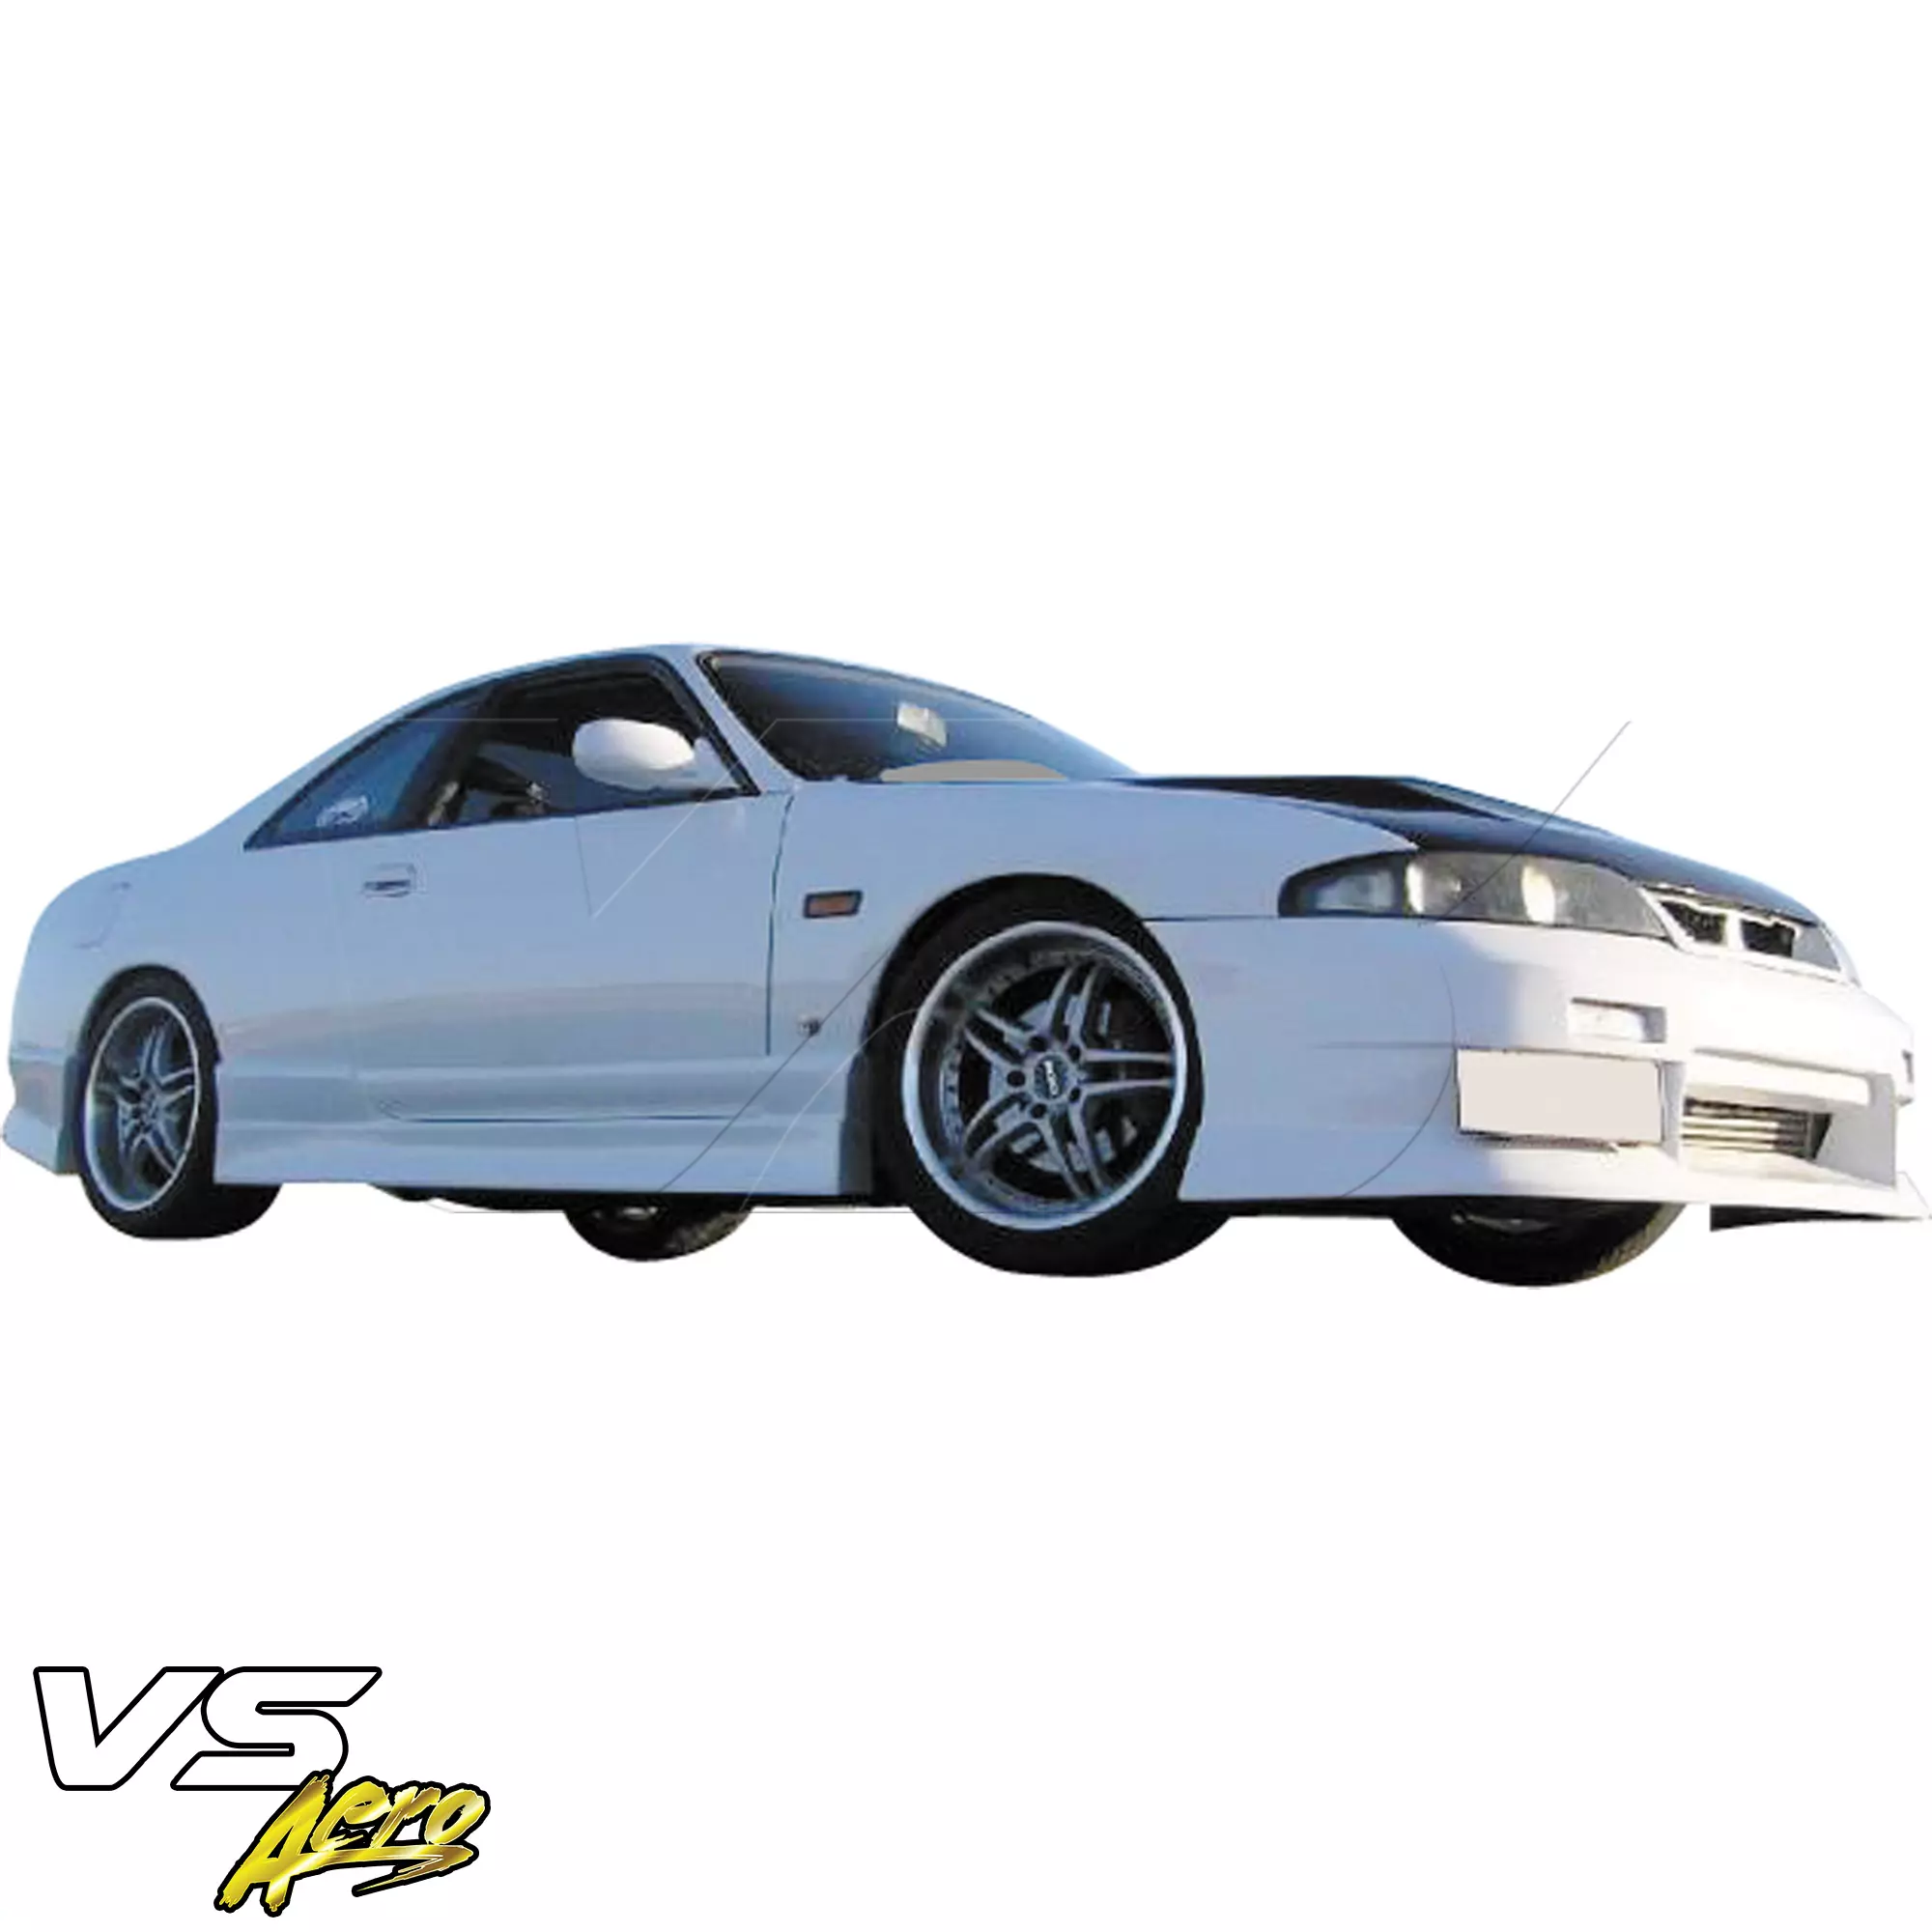 VSaero FRP MSPO v2 Body Kit 4pc > Nissan Skyline R33 GTS 1995-1998 > 2dr Coupe - Image 27